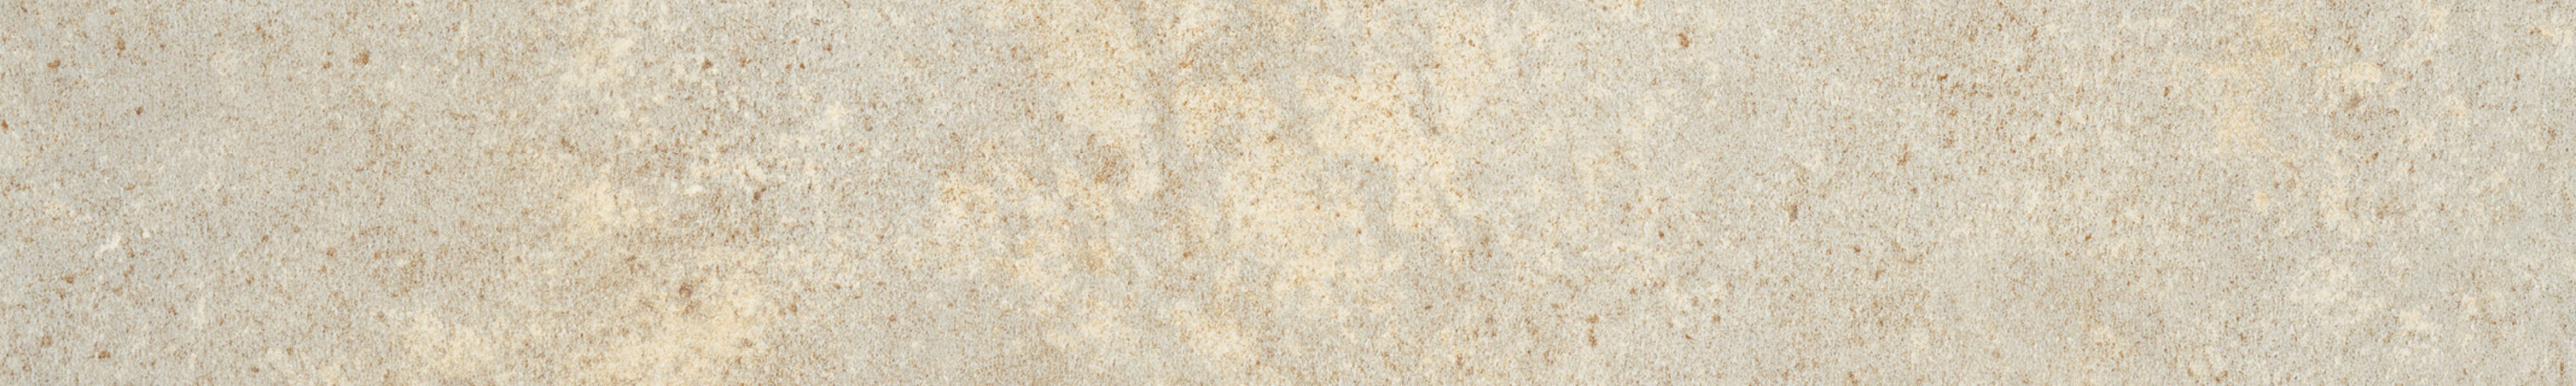 skai® structure Sahara sandstone     0,43 1420